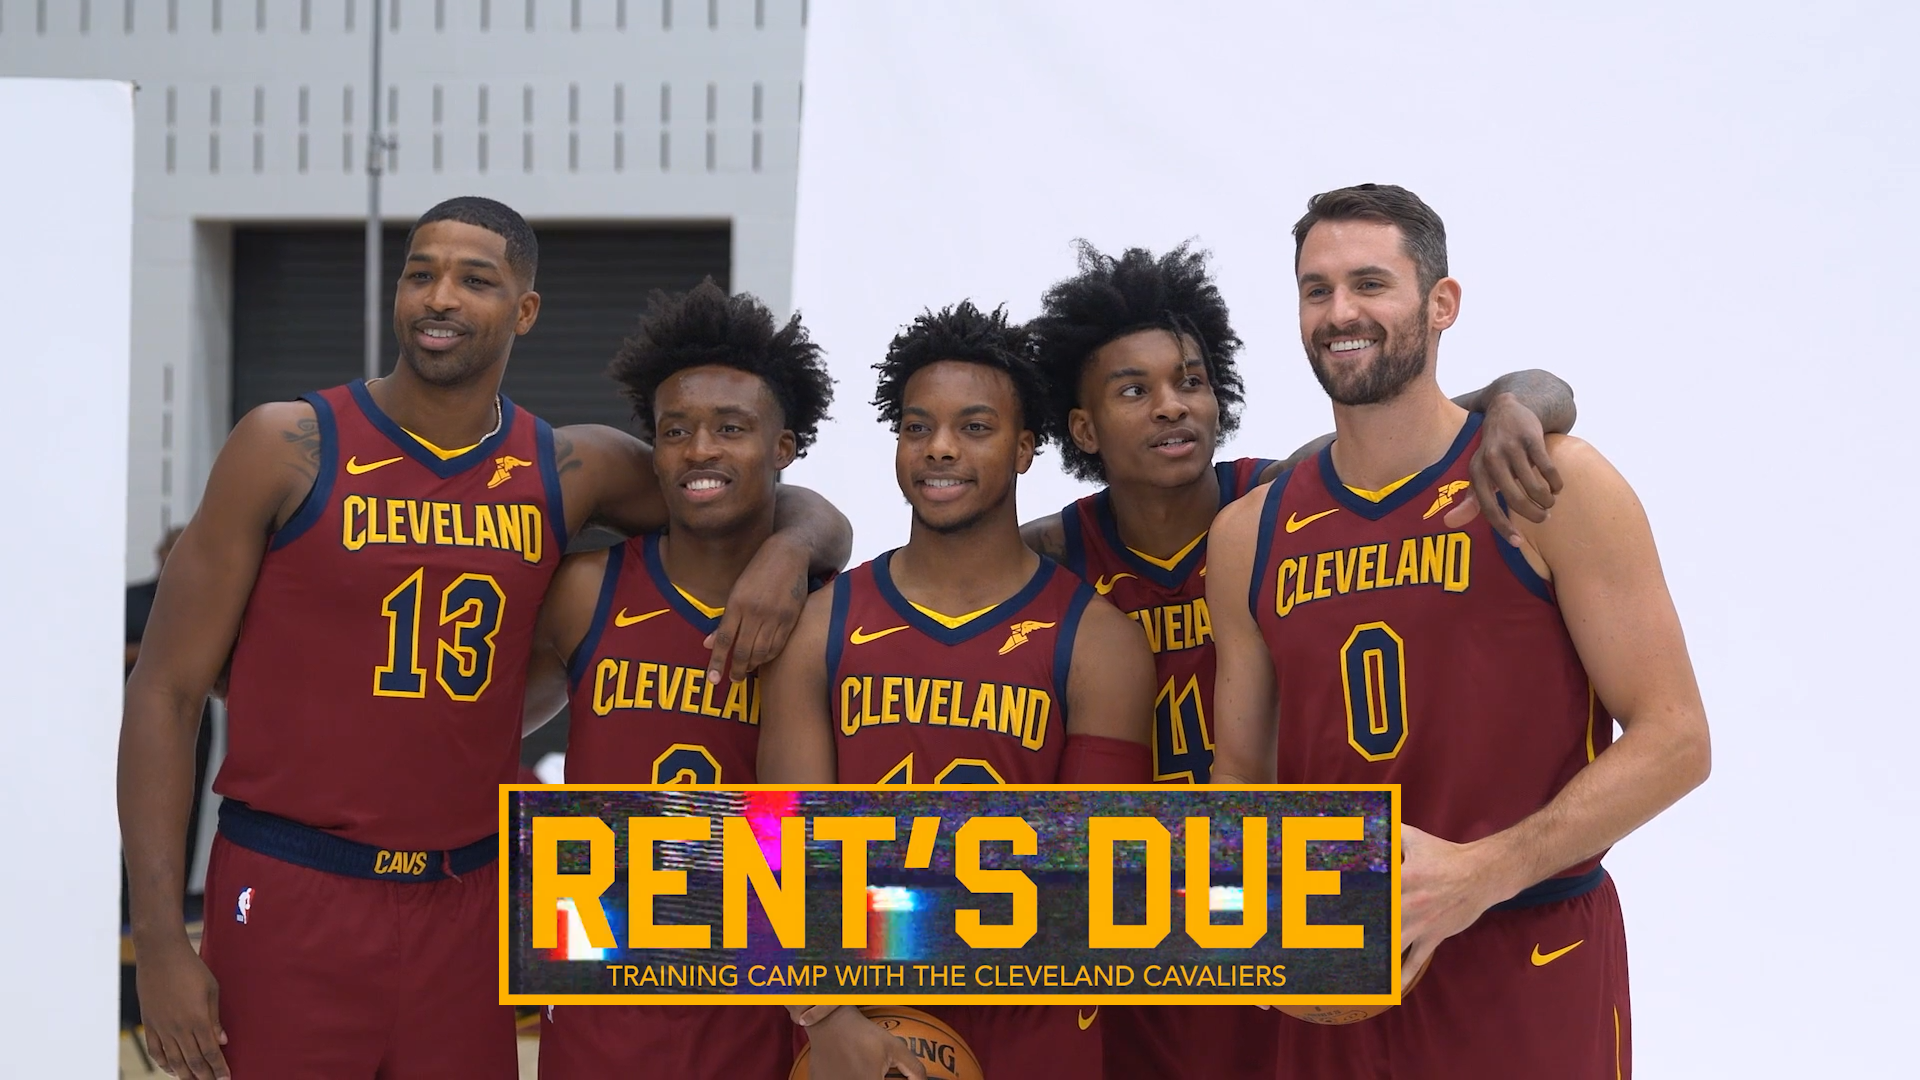 RENT’S DUE - Cleveland Cavaliers